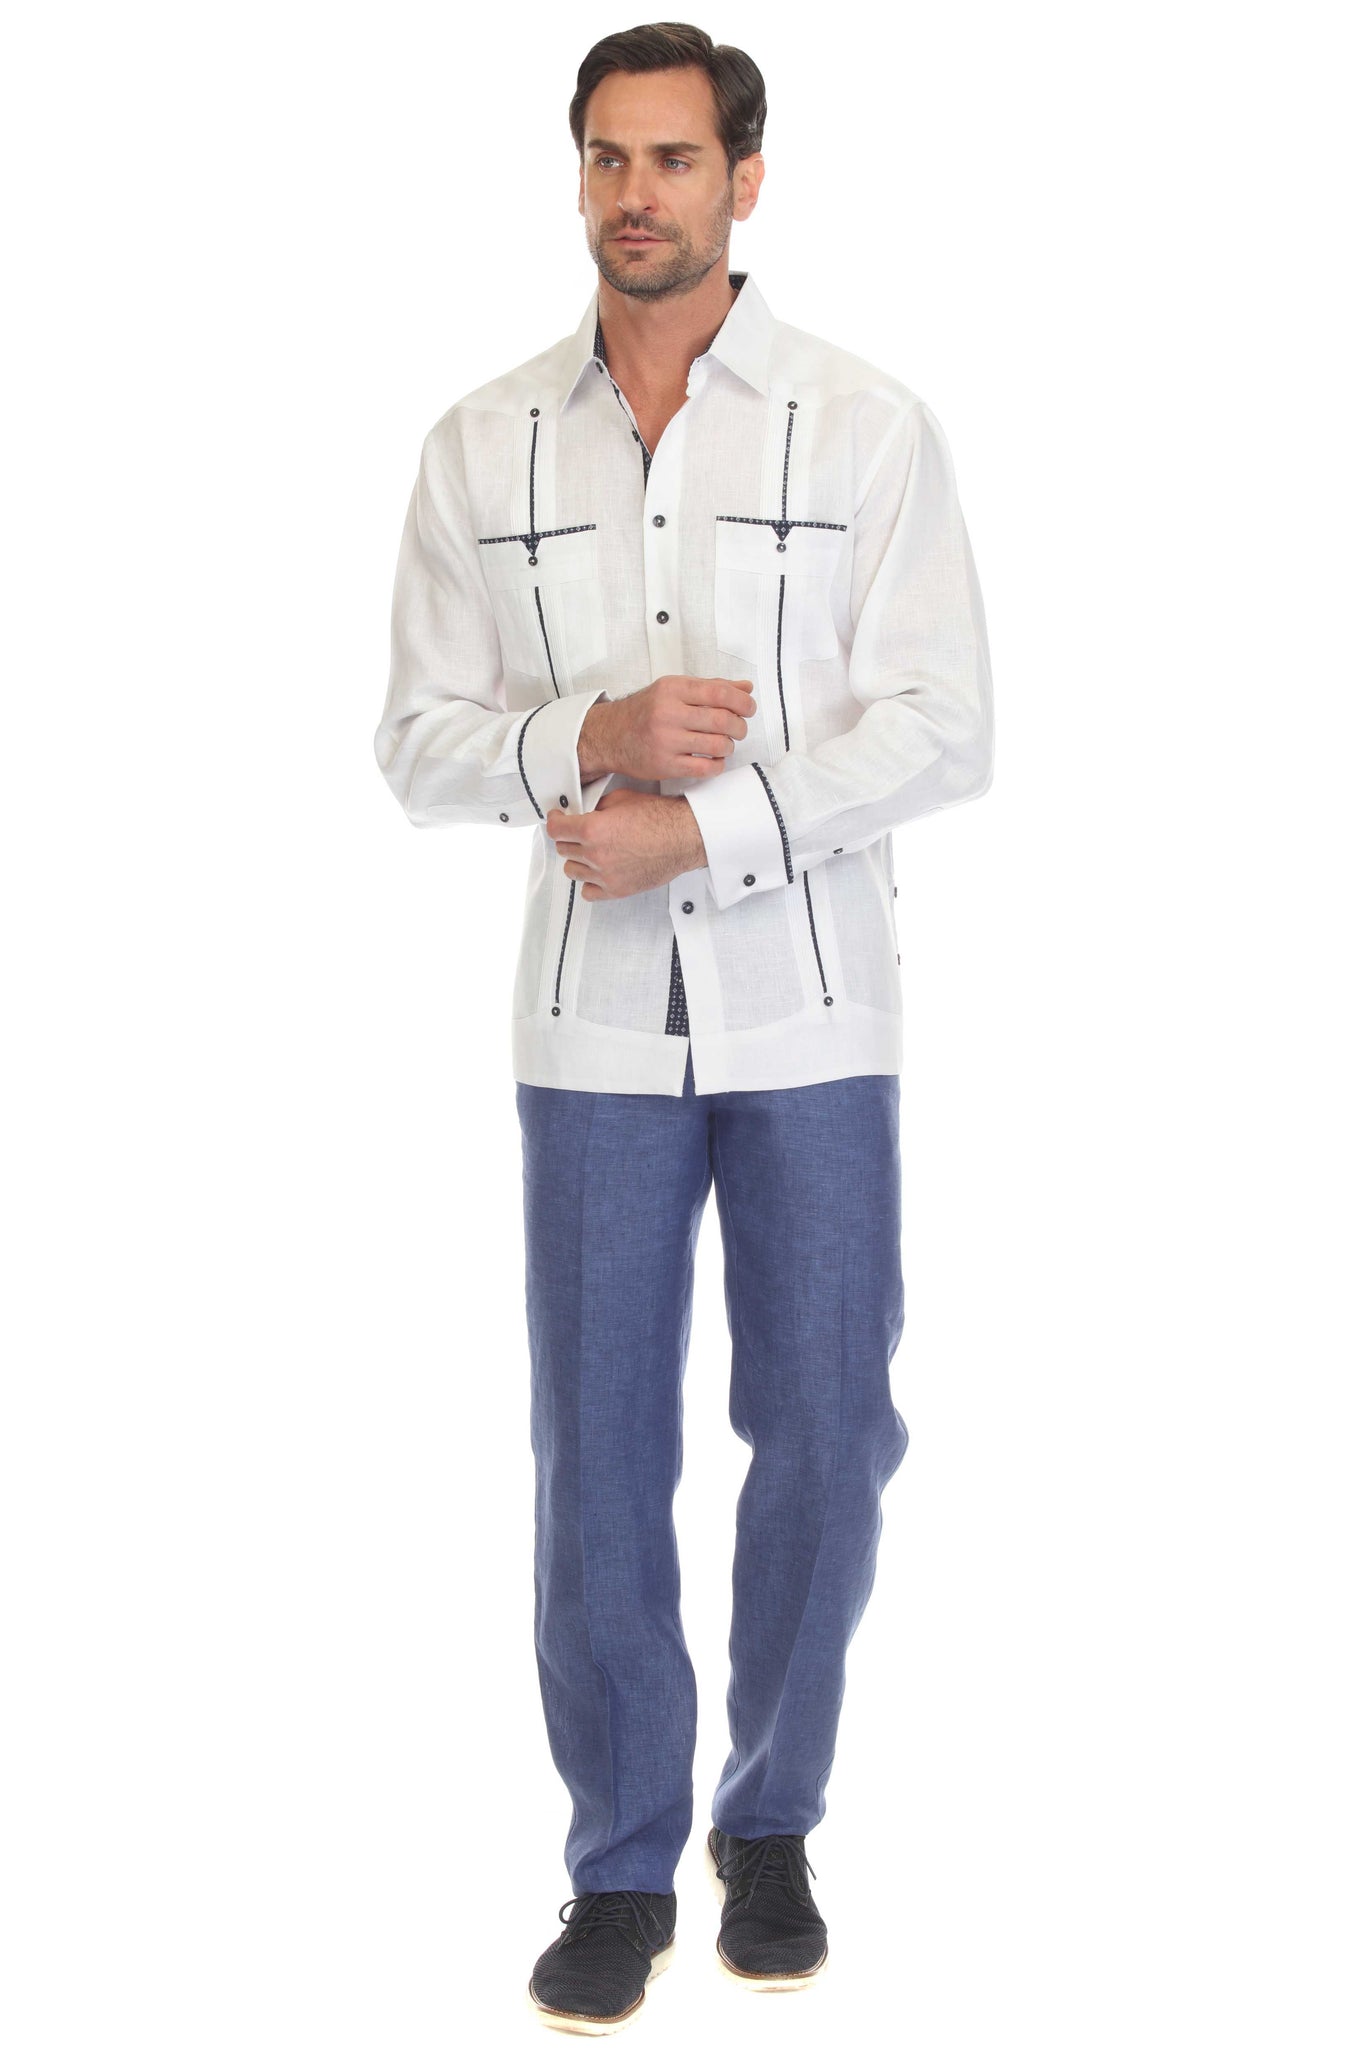 Mojito Men's 100% Linen Guayabera Shirt Long Sleeve with Print Trim Accent